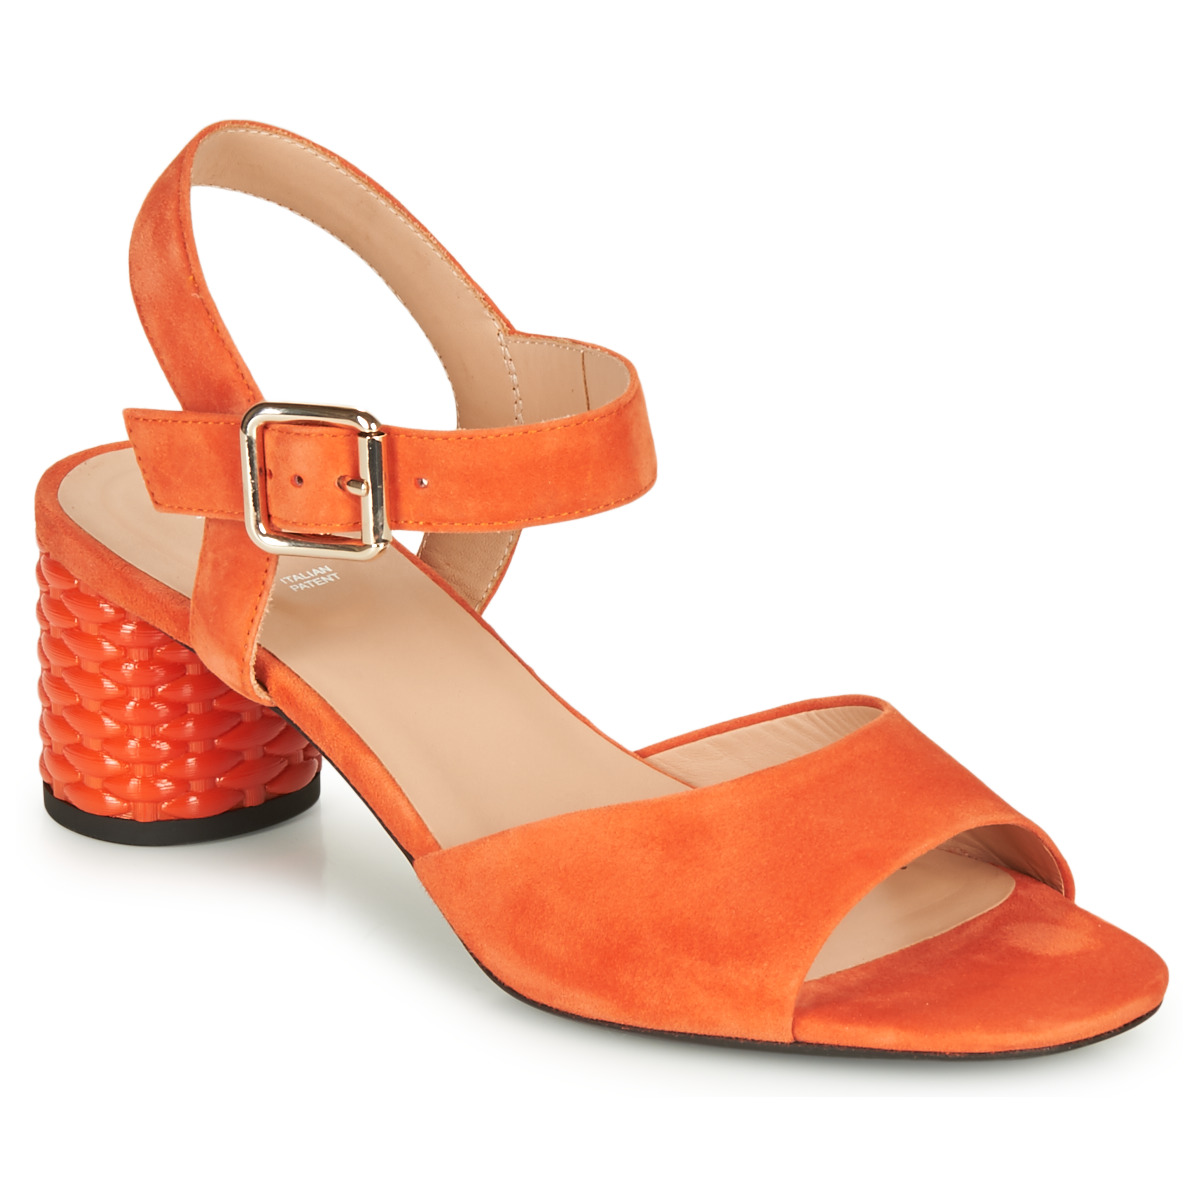 Schoenen Dames Sandalen / Open schoenen Geox D ORTENSIA MID SANDA Orange